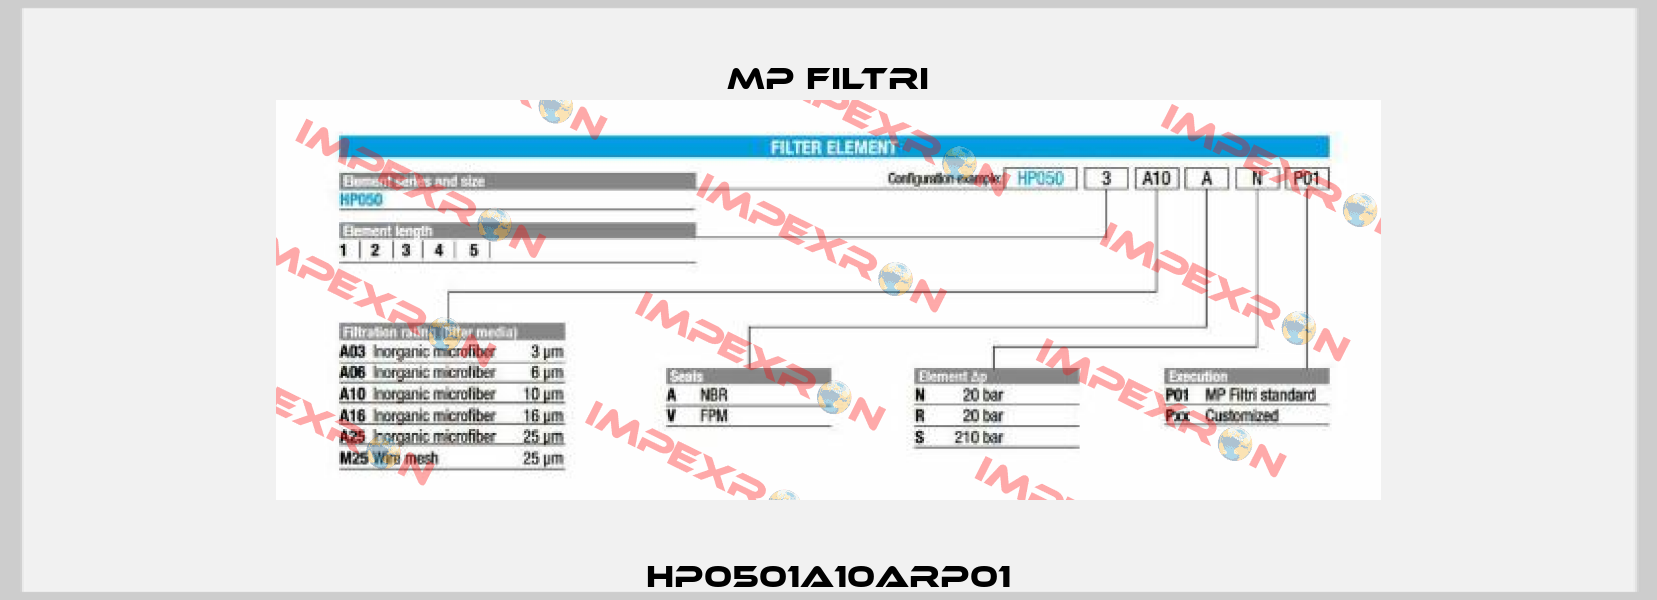 HP0501A10ARP01 MP Filtri